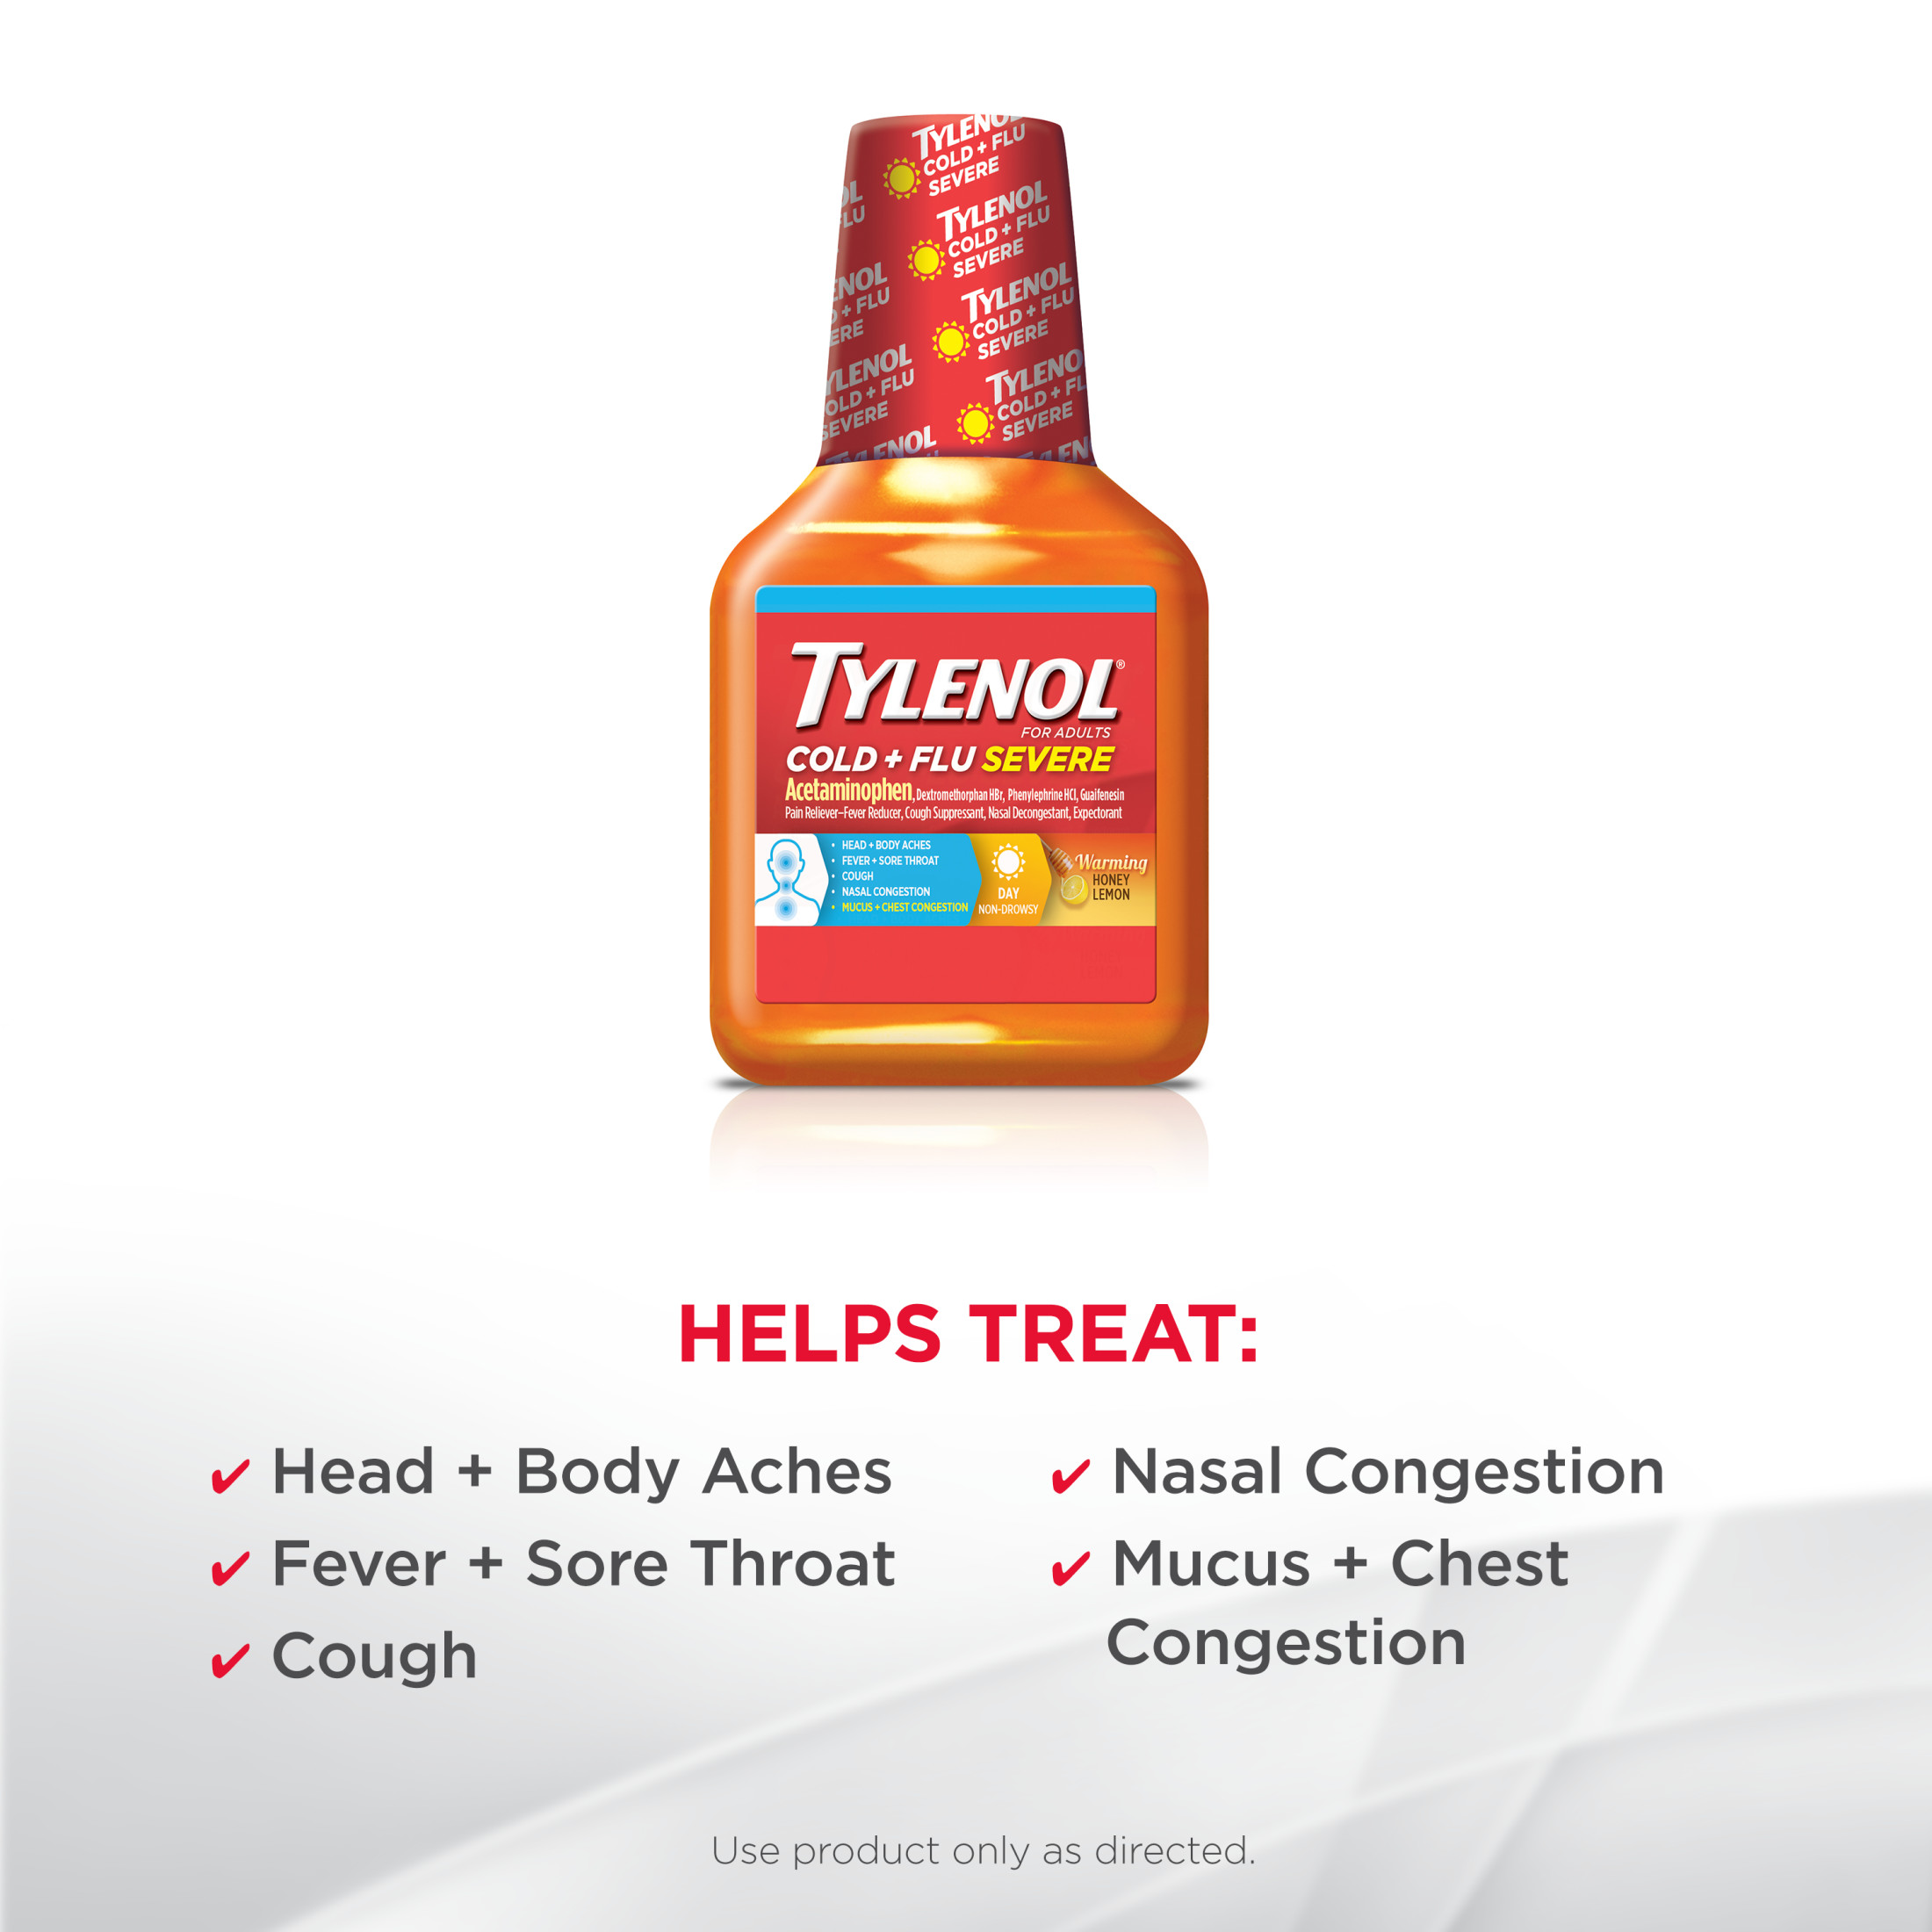 Tylenol Cold + Flu Severe Flu Medicine, Honey Lemon Flavor, 8 fl. oz - image 3 of 12